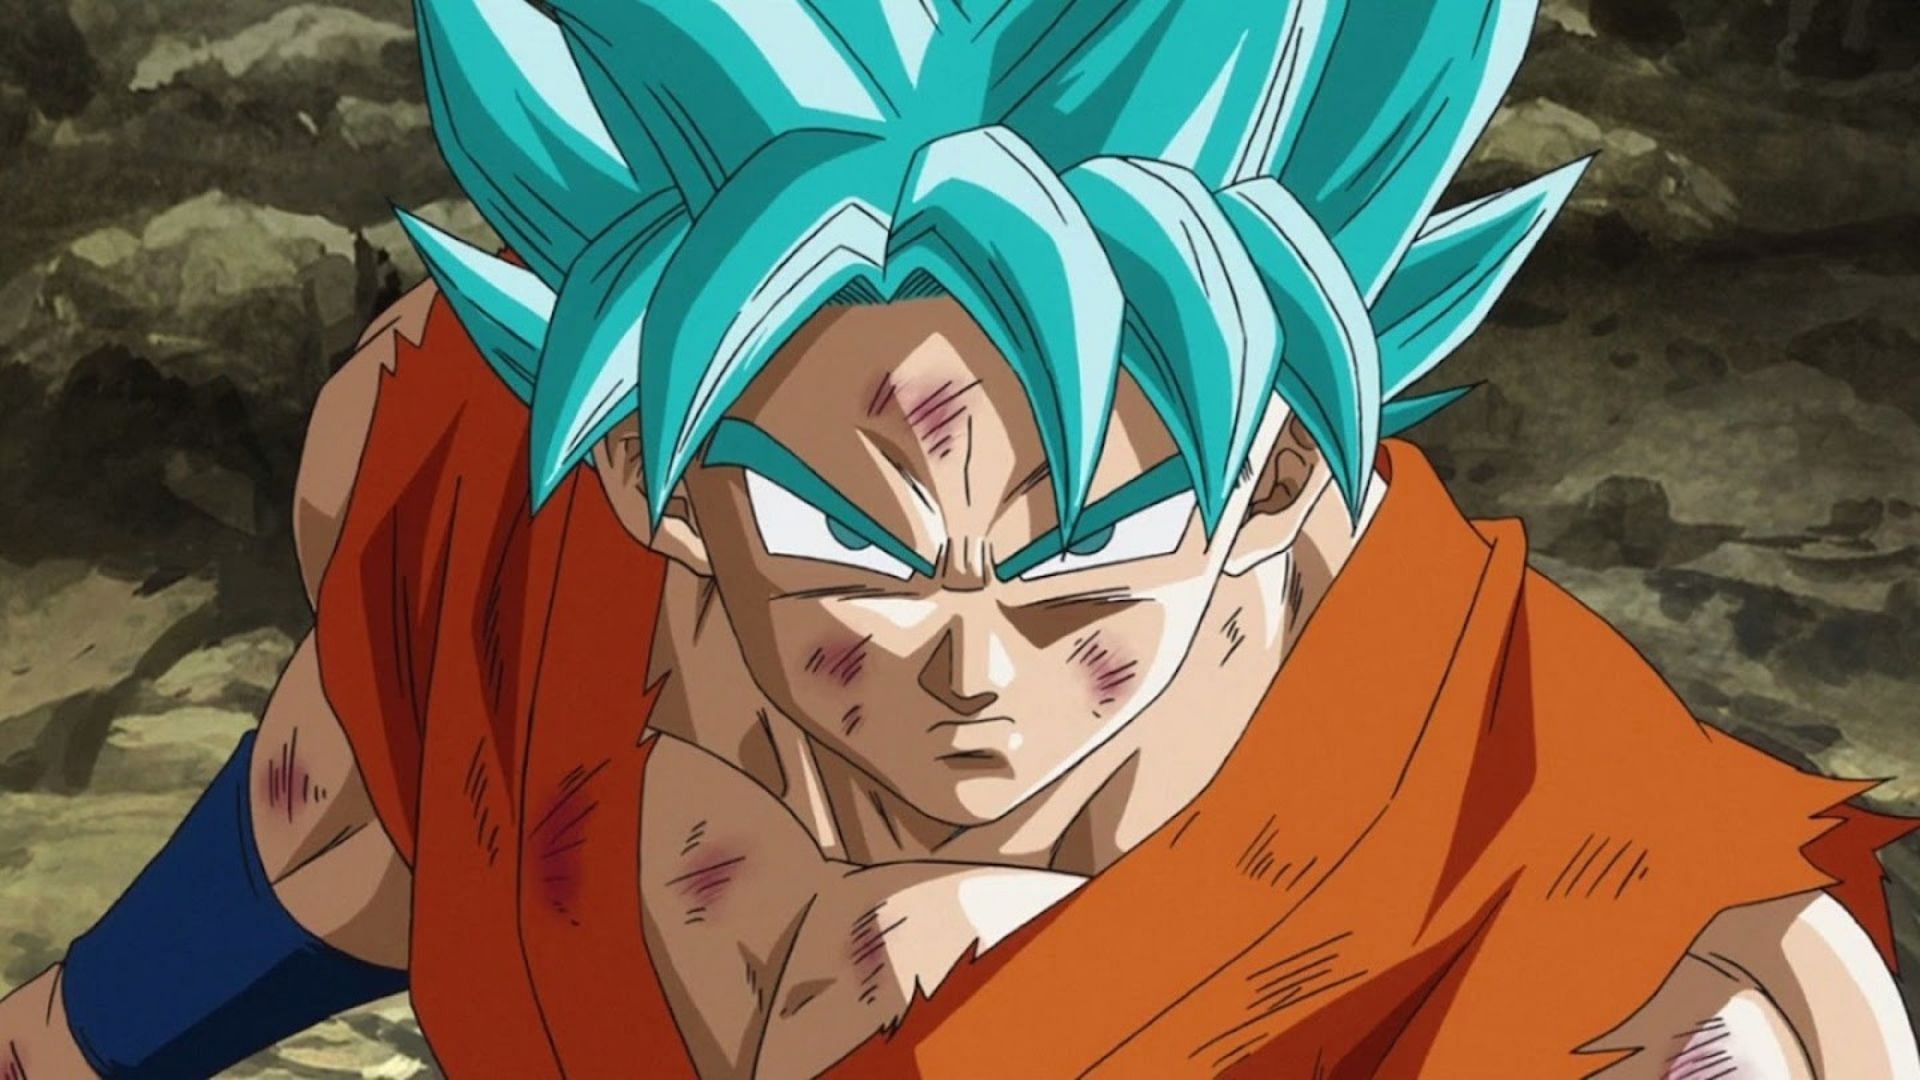 Son Goku as seen in the anime series (Image via Toei Animation)